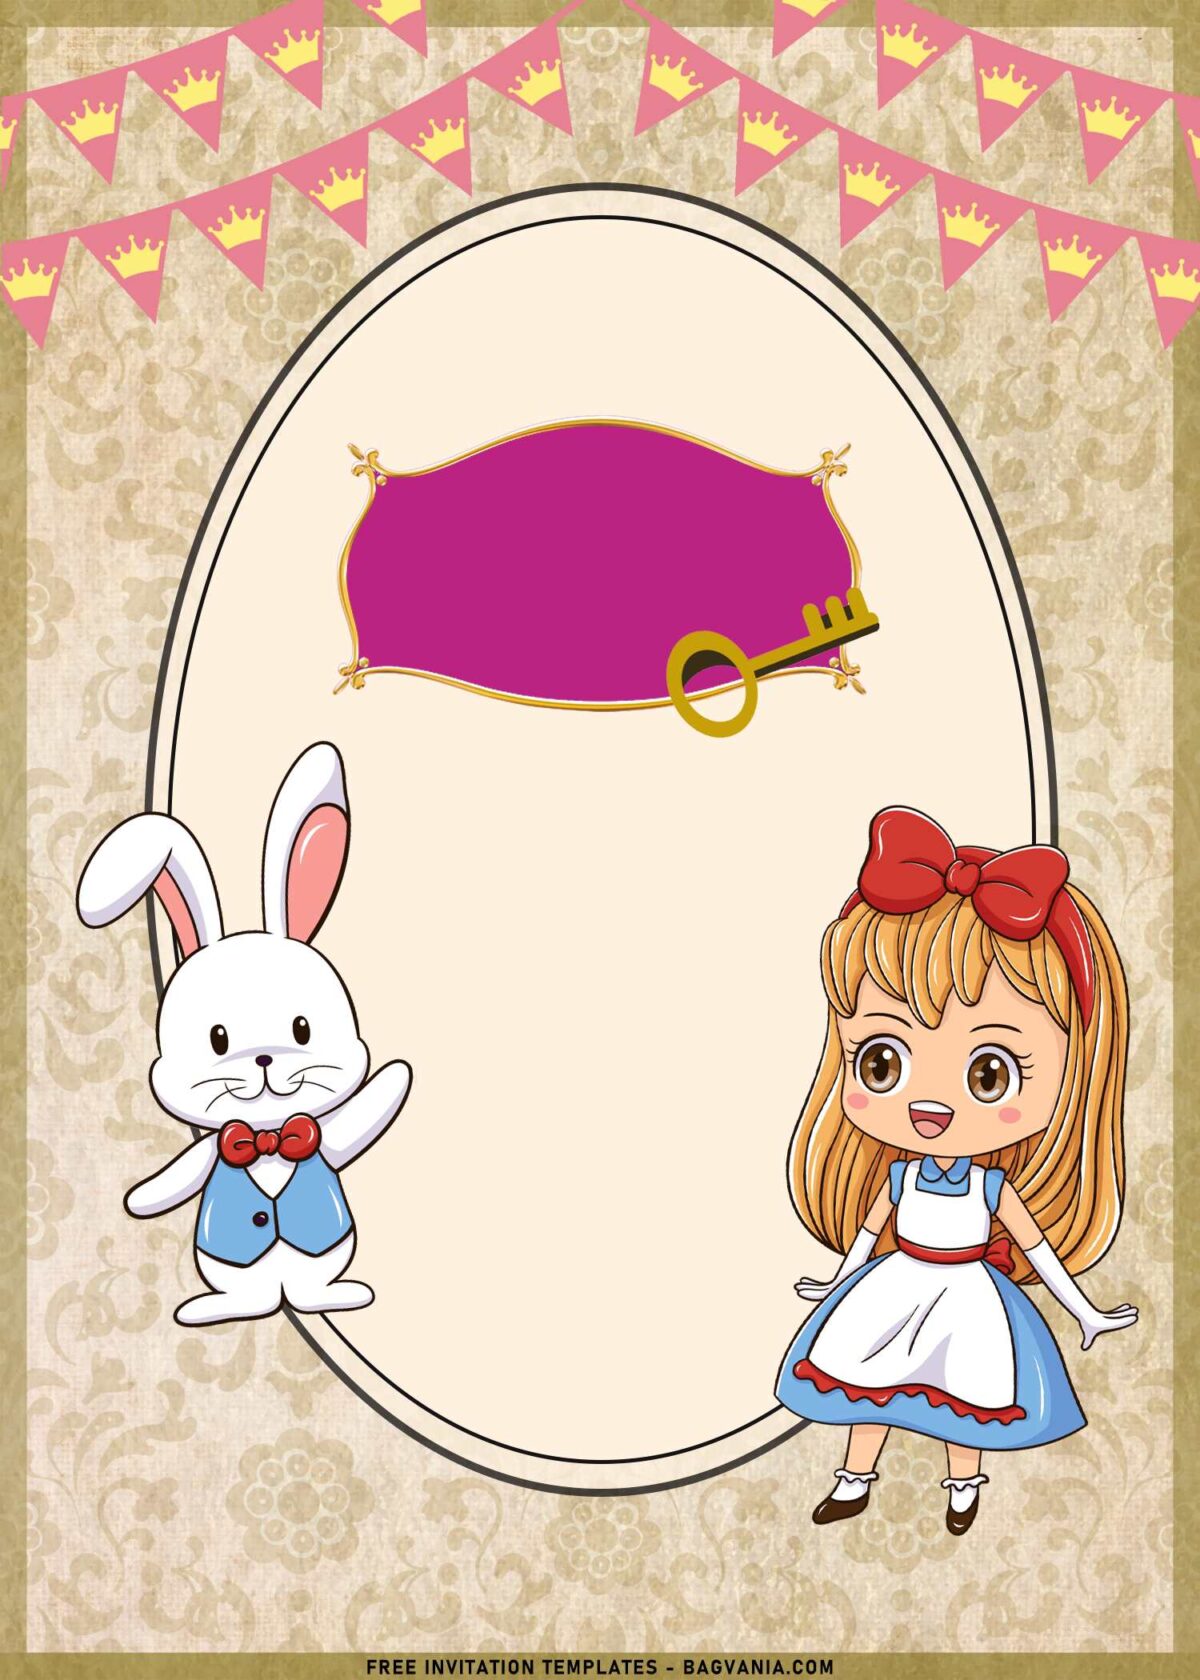 7+ Vintage Alice In Wonderland Birthday Invitation Templates with cute white rabbit